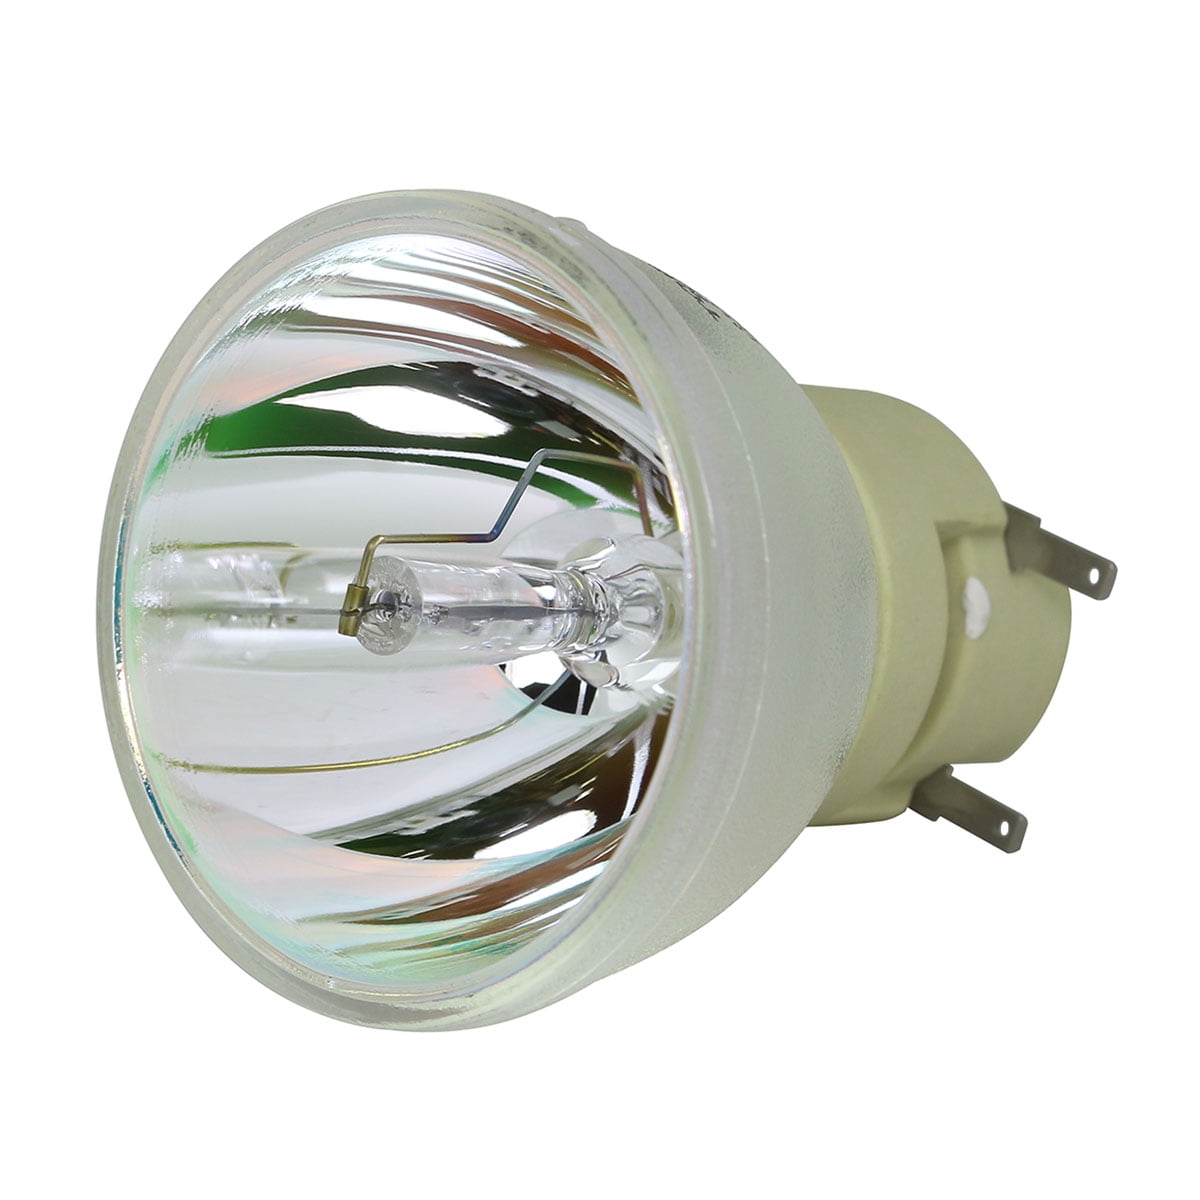 fe Egnet Morgenøvelser Original Philips Projector Lamp Replacement for Optoma GT1080 (Bulb Only) -  Walmart.com